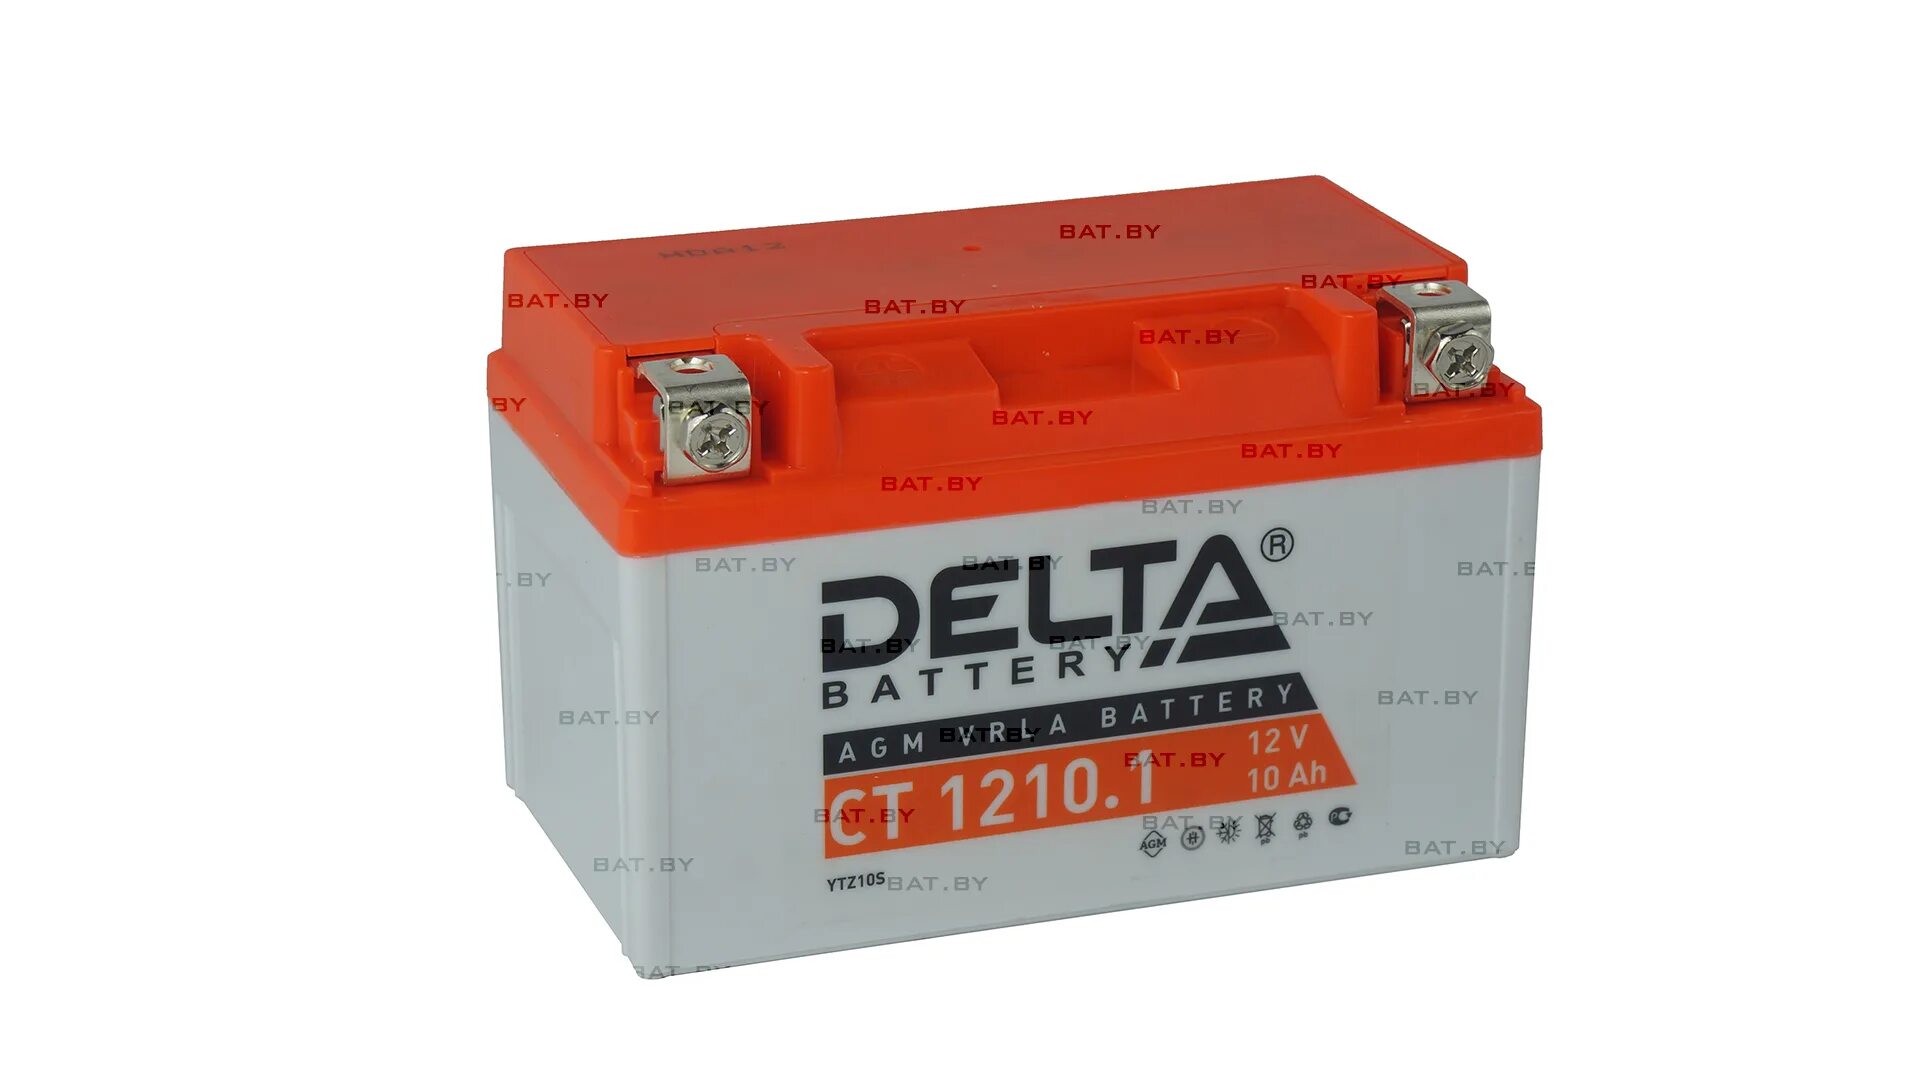 Аккумулятор 10 а ч. Ст 1210.1 аккумулятор Дельта. Аккумулятор Yuasa ytz10s. Аккумуляторная батарея Delta ст1210. Ytz10s аккумулятор аналог.